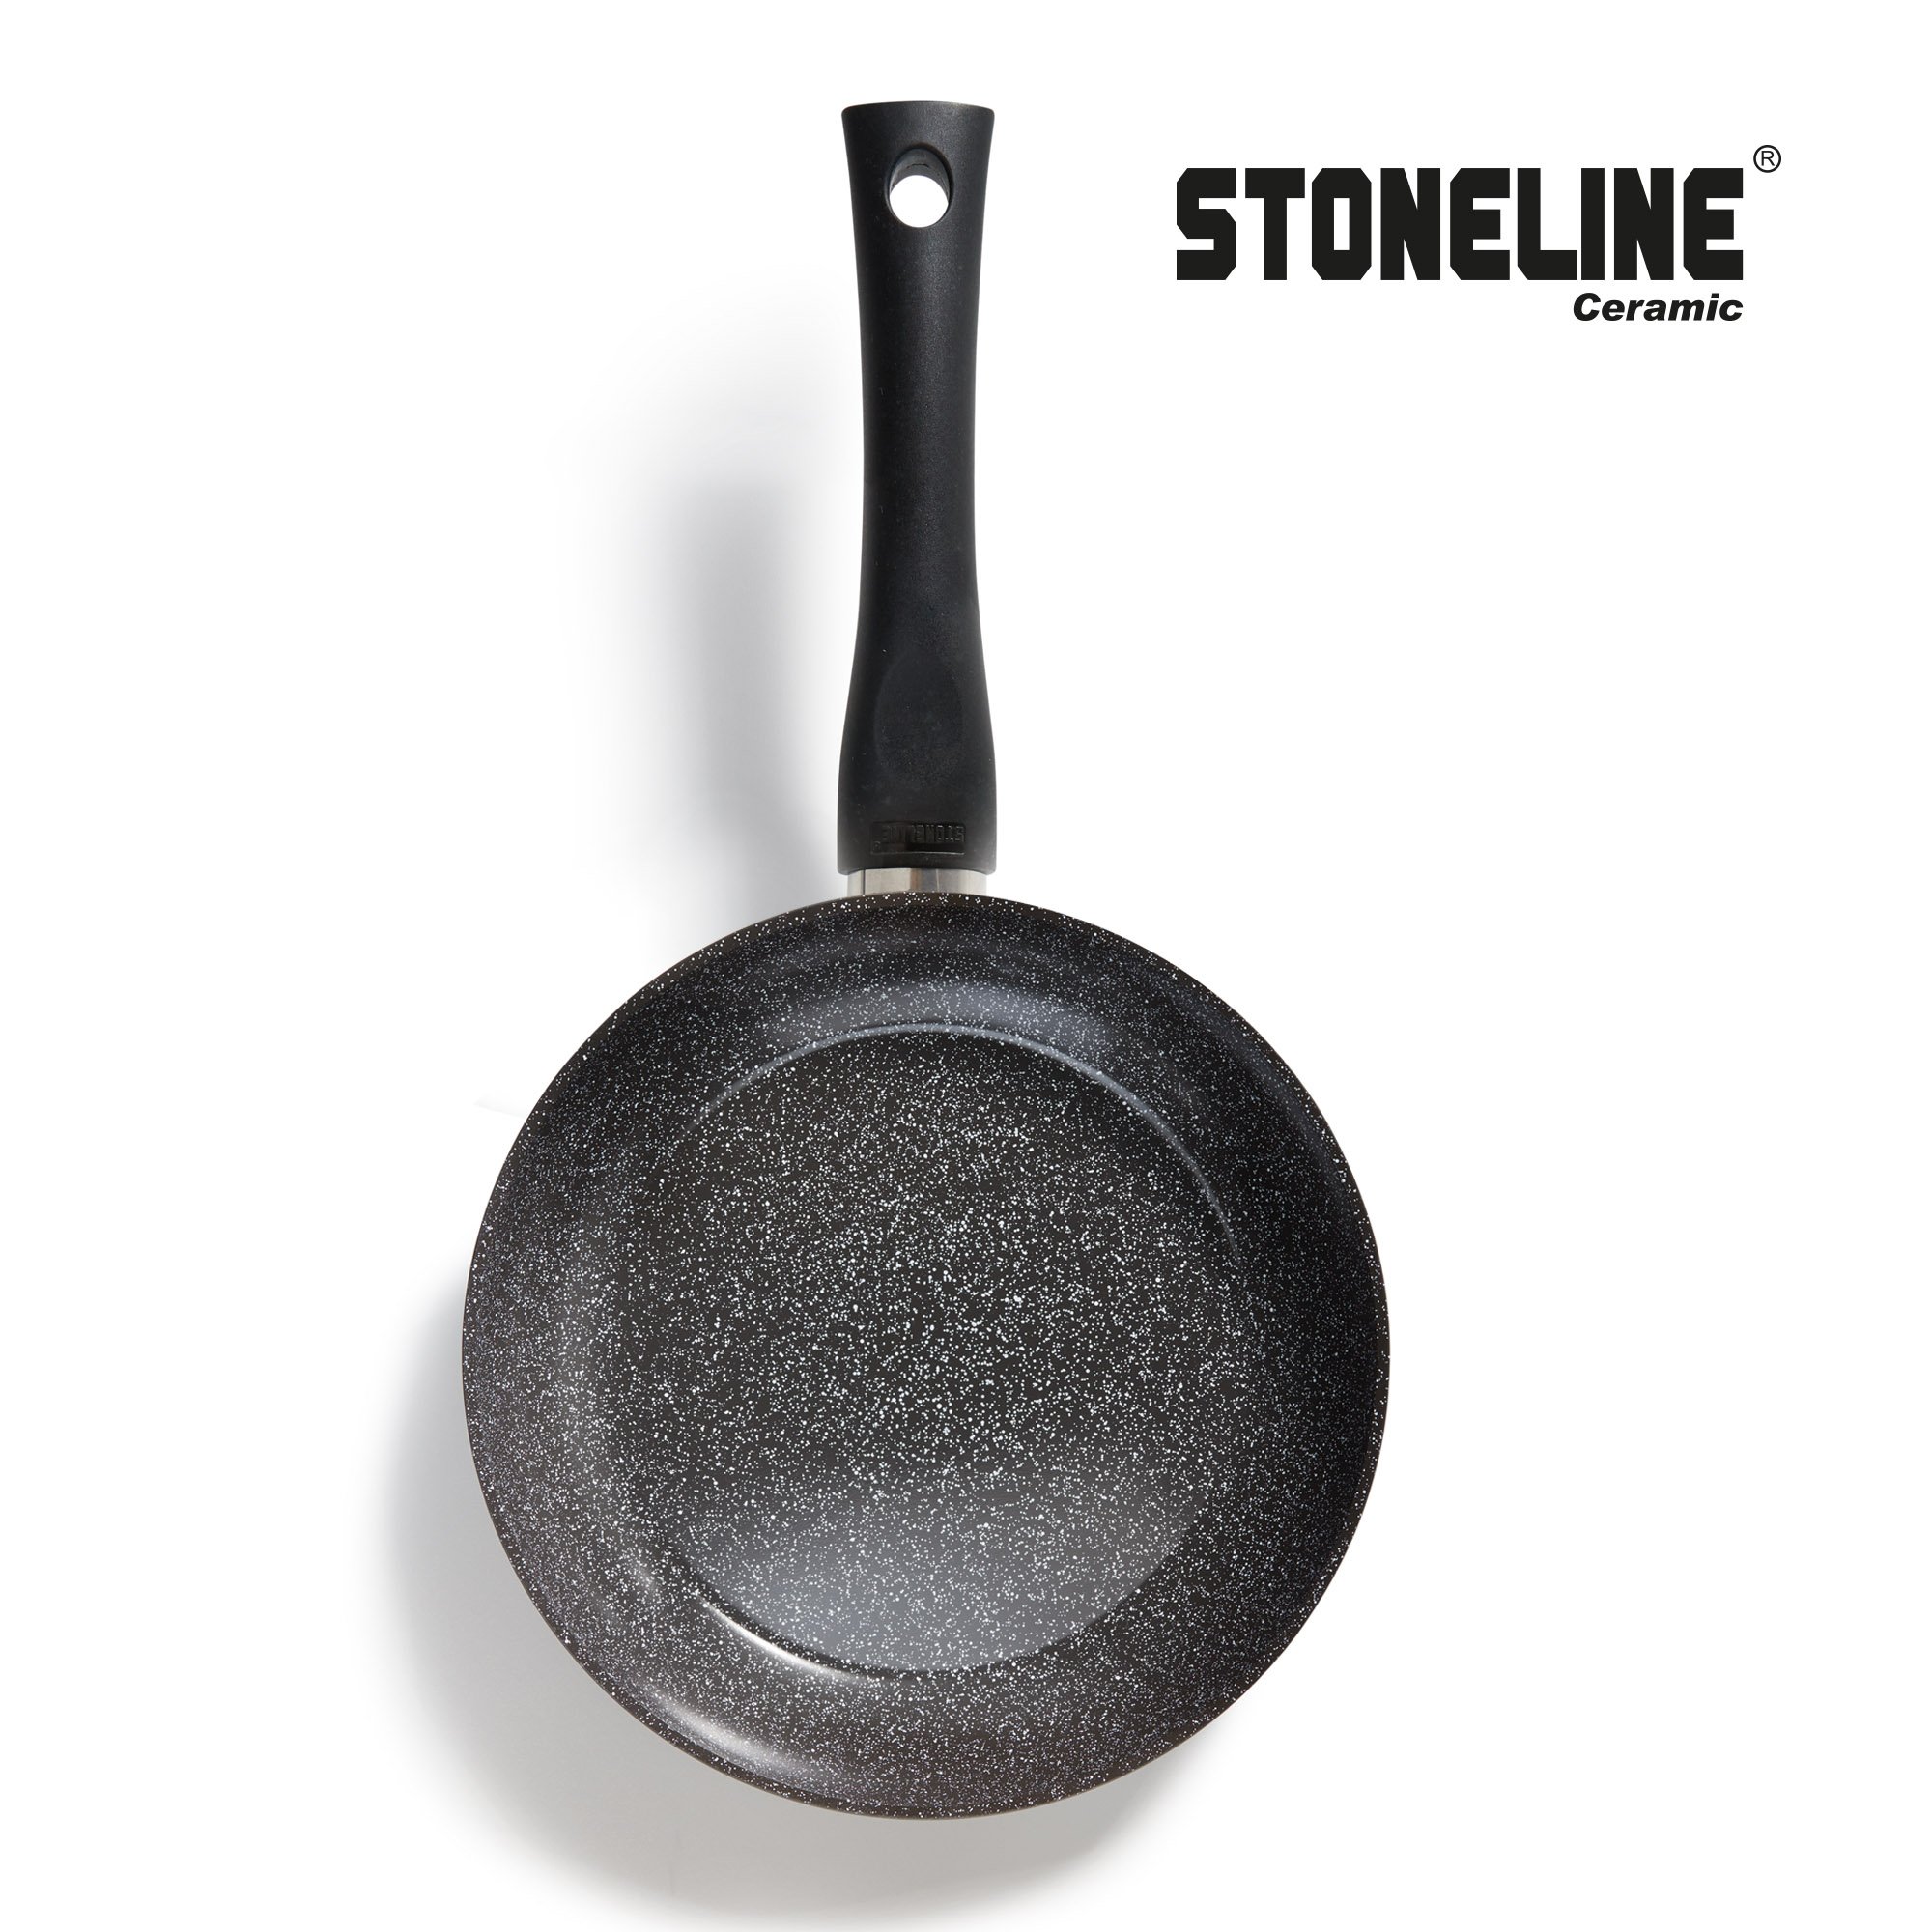 STONELINE® CERAMIC Frying Pan 18 cm, Non-Stick Pan | CERAMIC Cookware